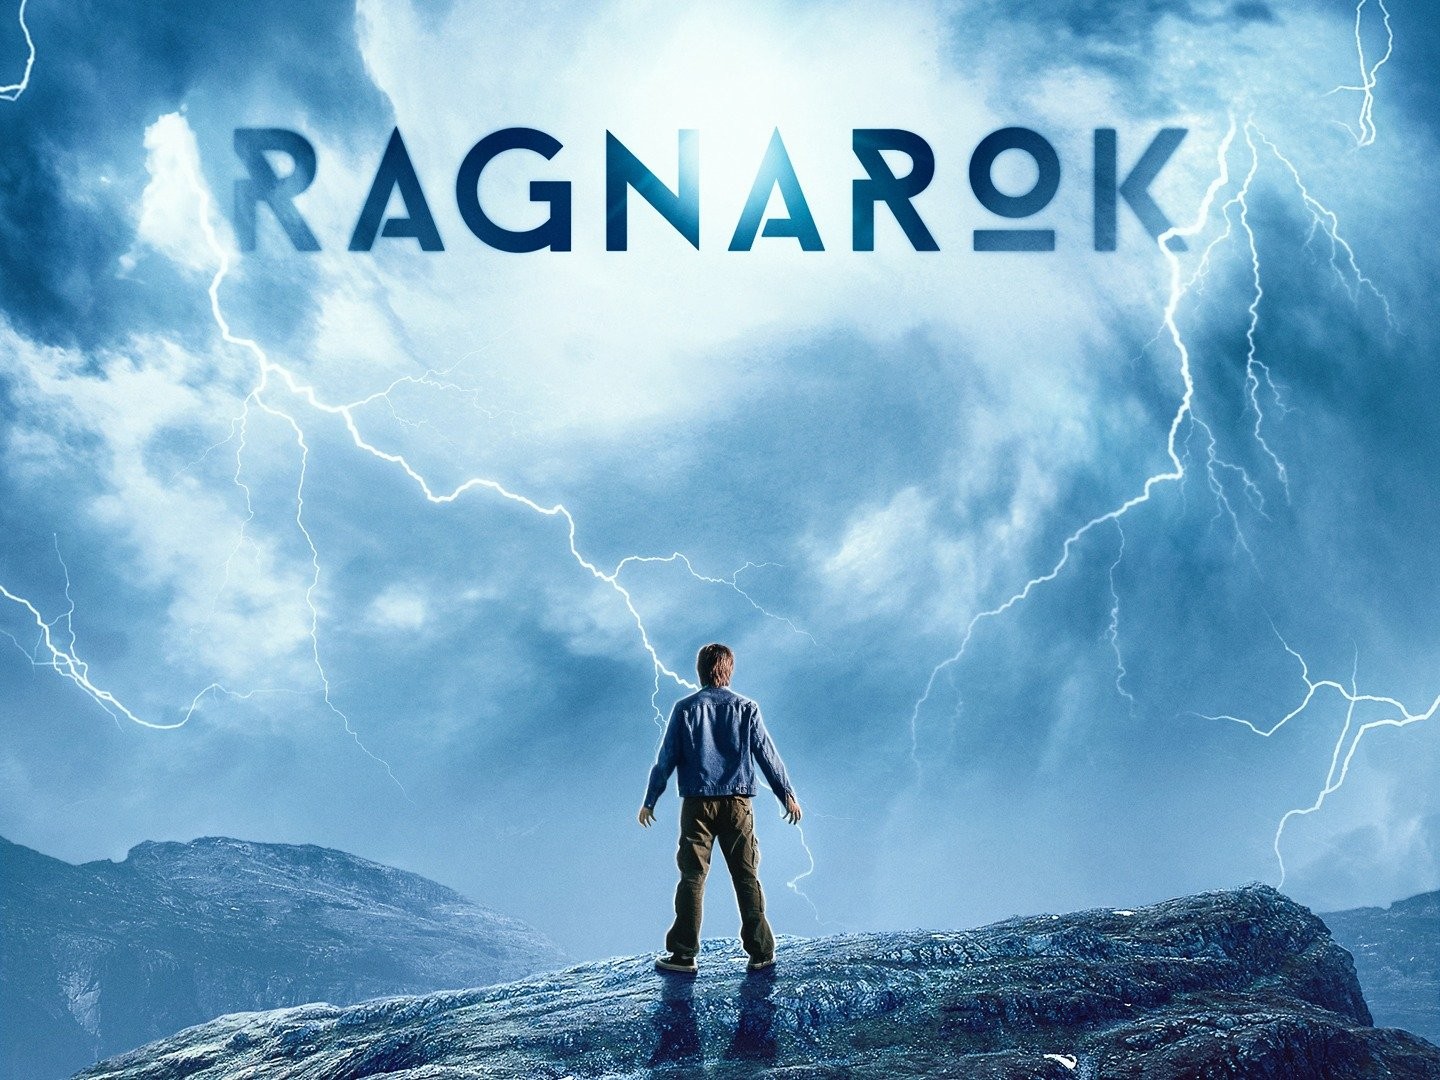 Ragnarok (TV series) - Wikipedia